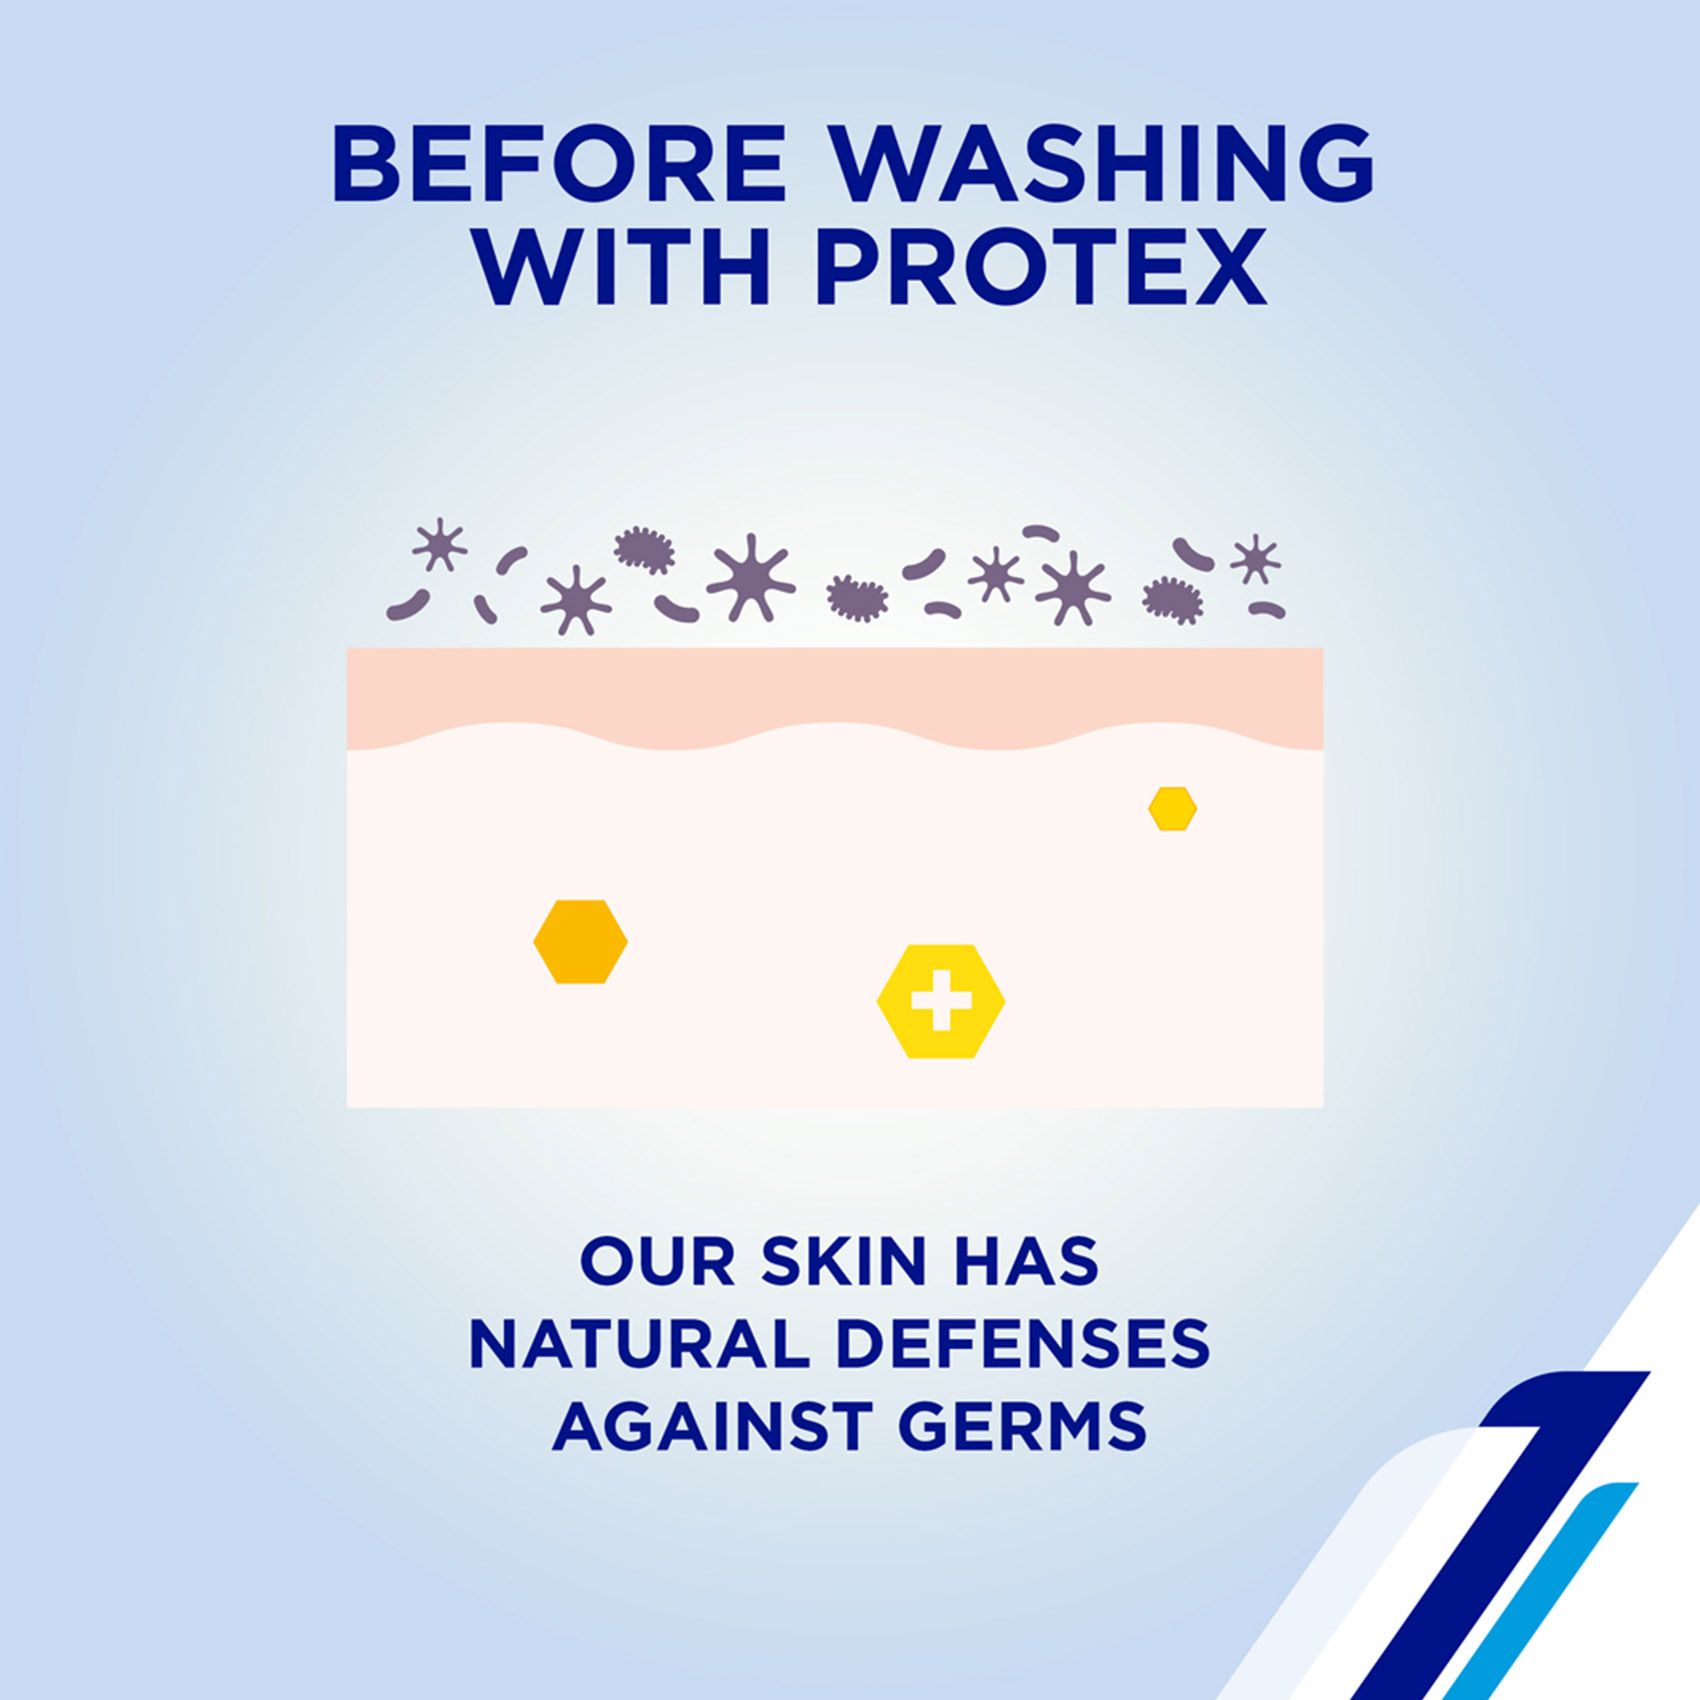 Protex Deep Clean 150g Antibacterial Soap